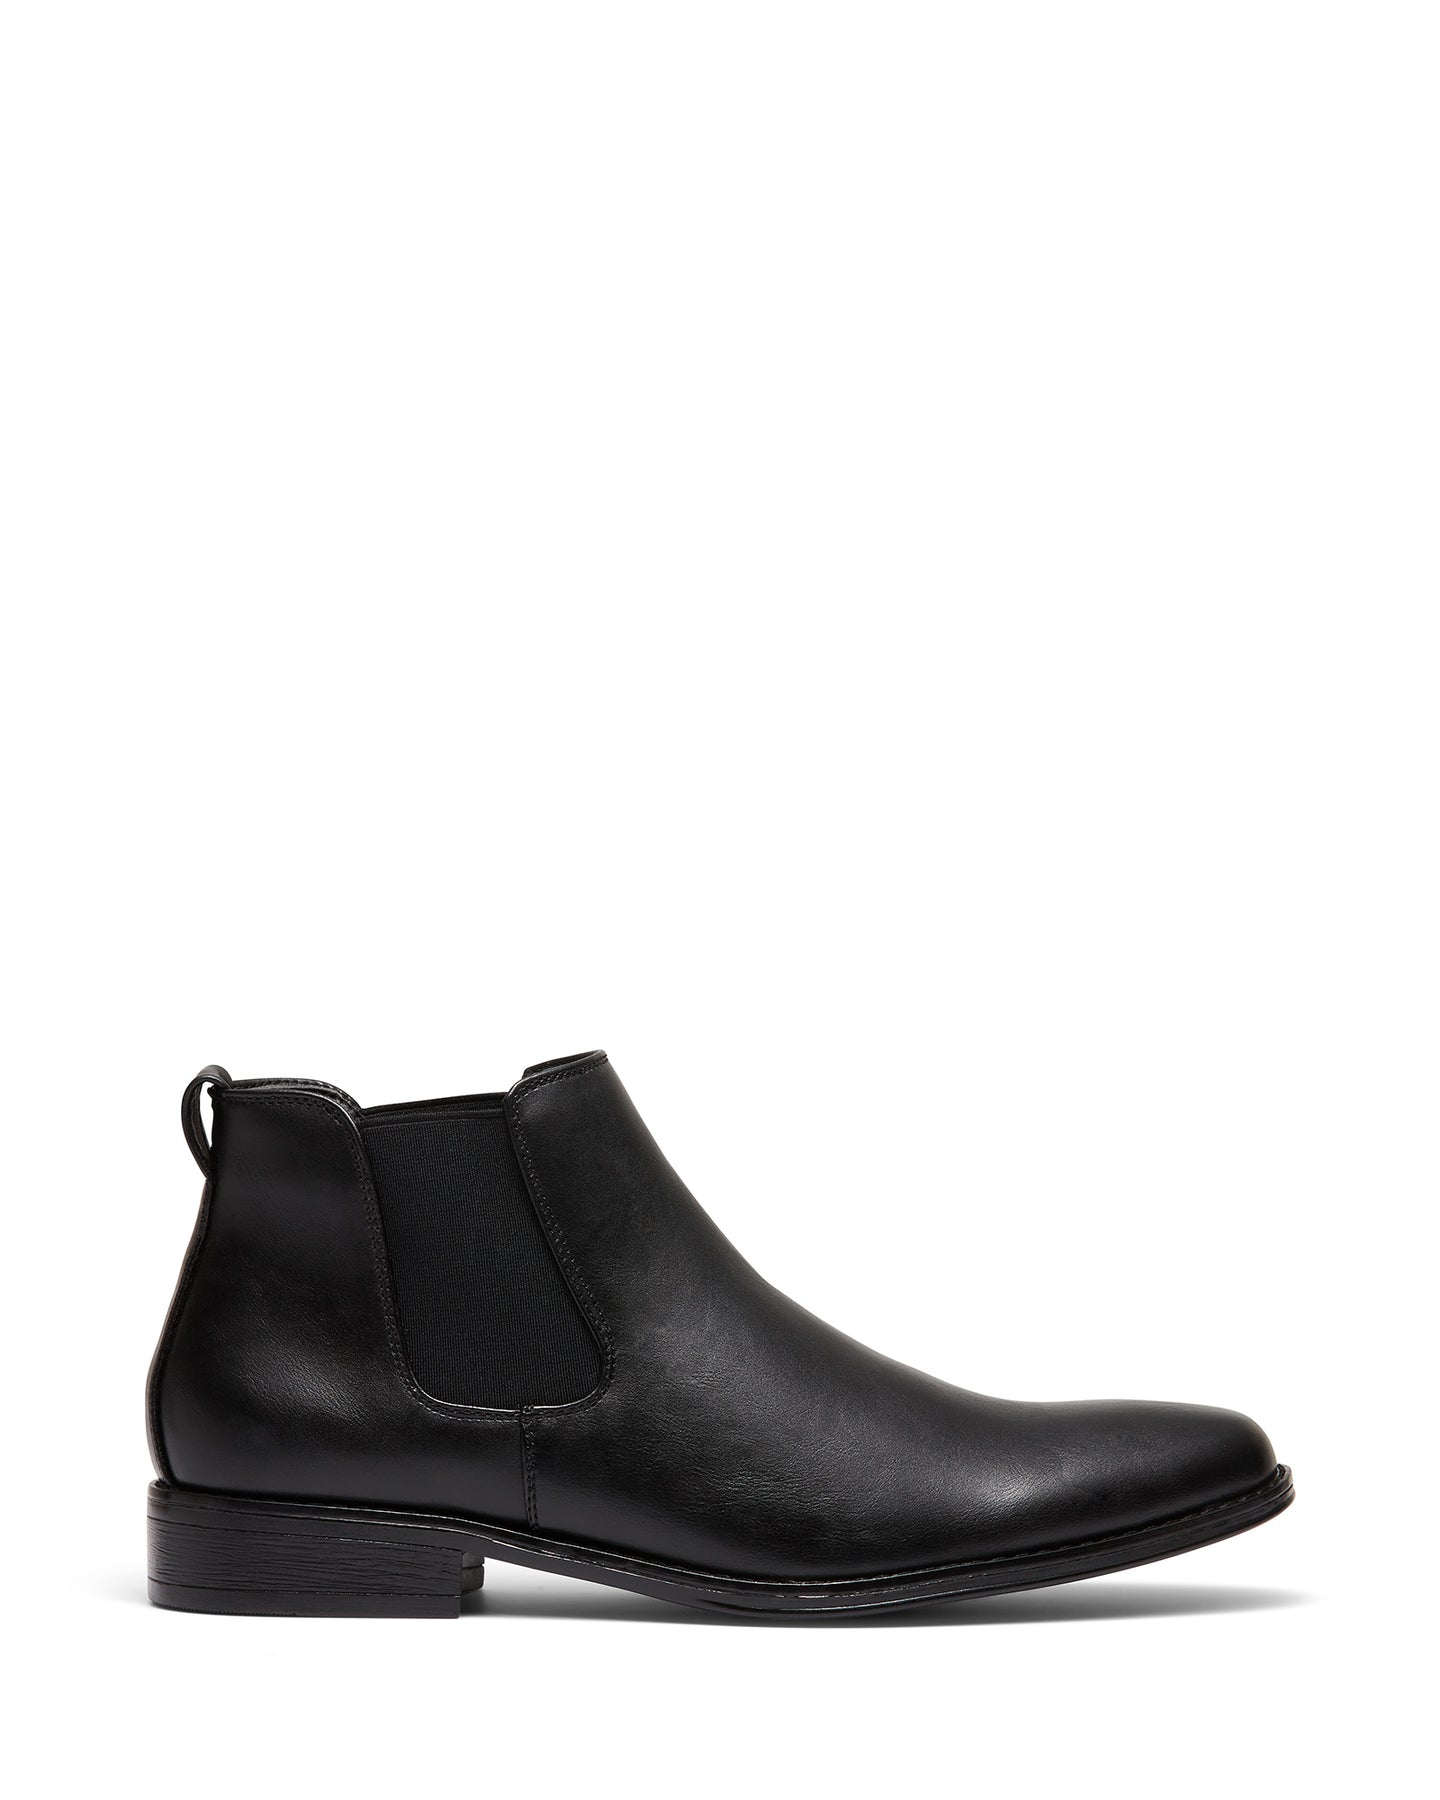 Uncut Shoes Canterbury Black | Men's Boot | Chelsea | Dress | Pull On